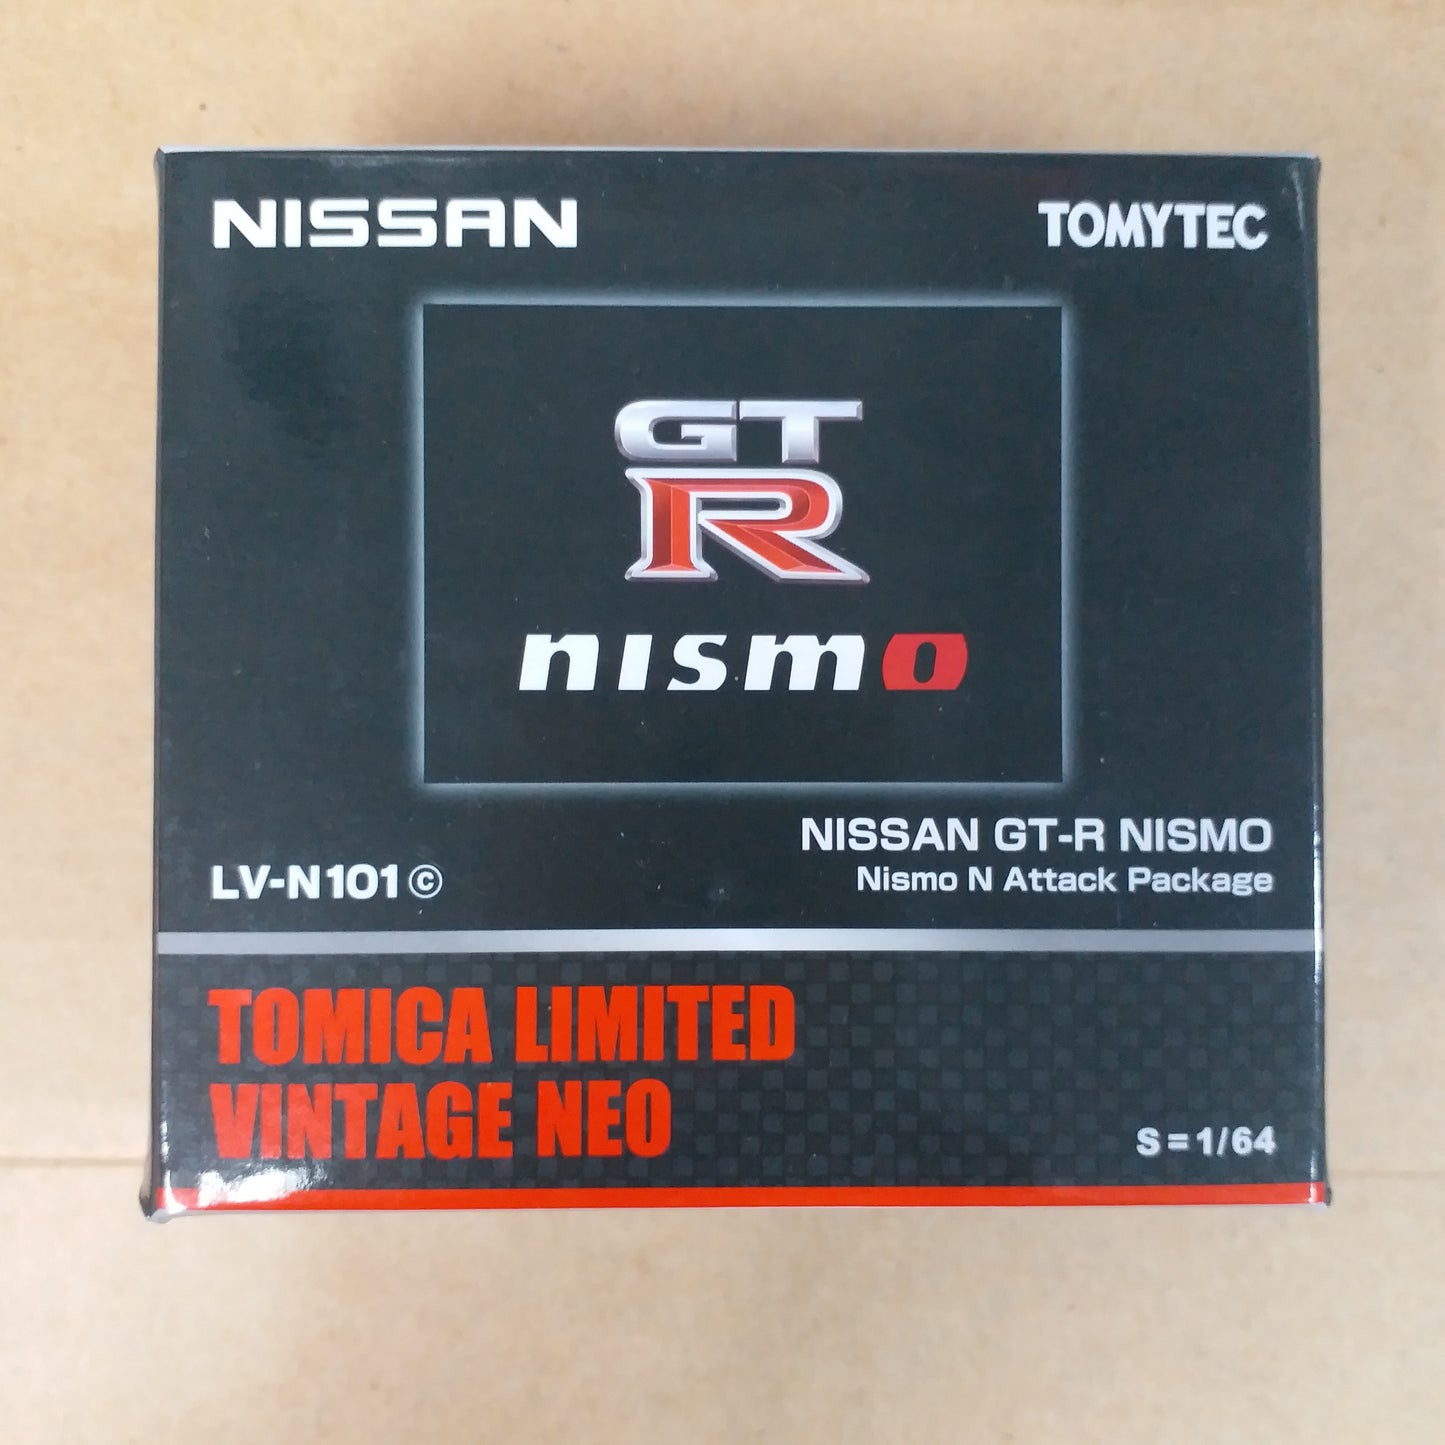 Tomica Limited Vintage Neo LV-N101c Nissan GT-R Nismo N Attack Package